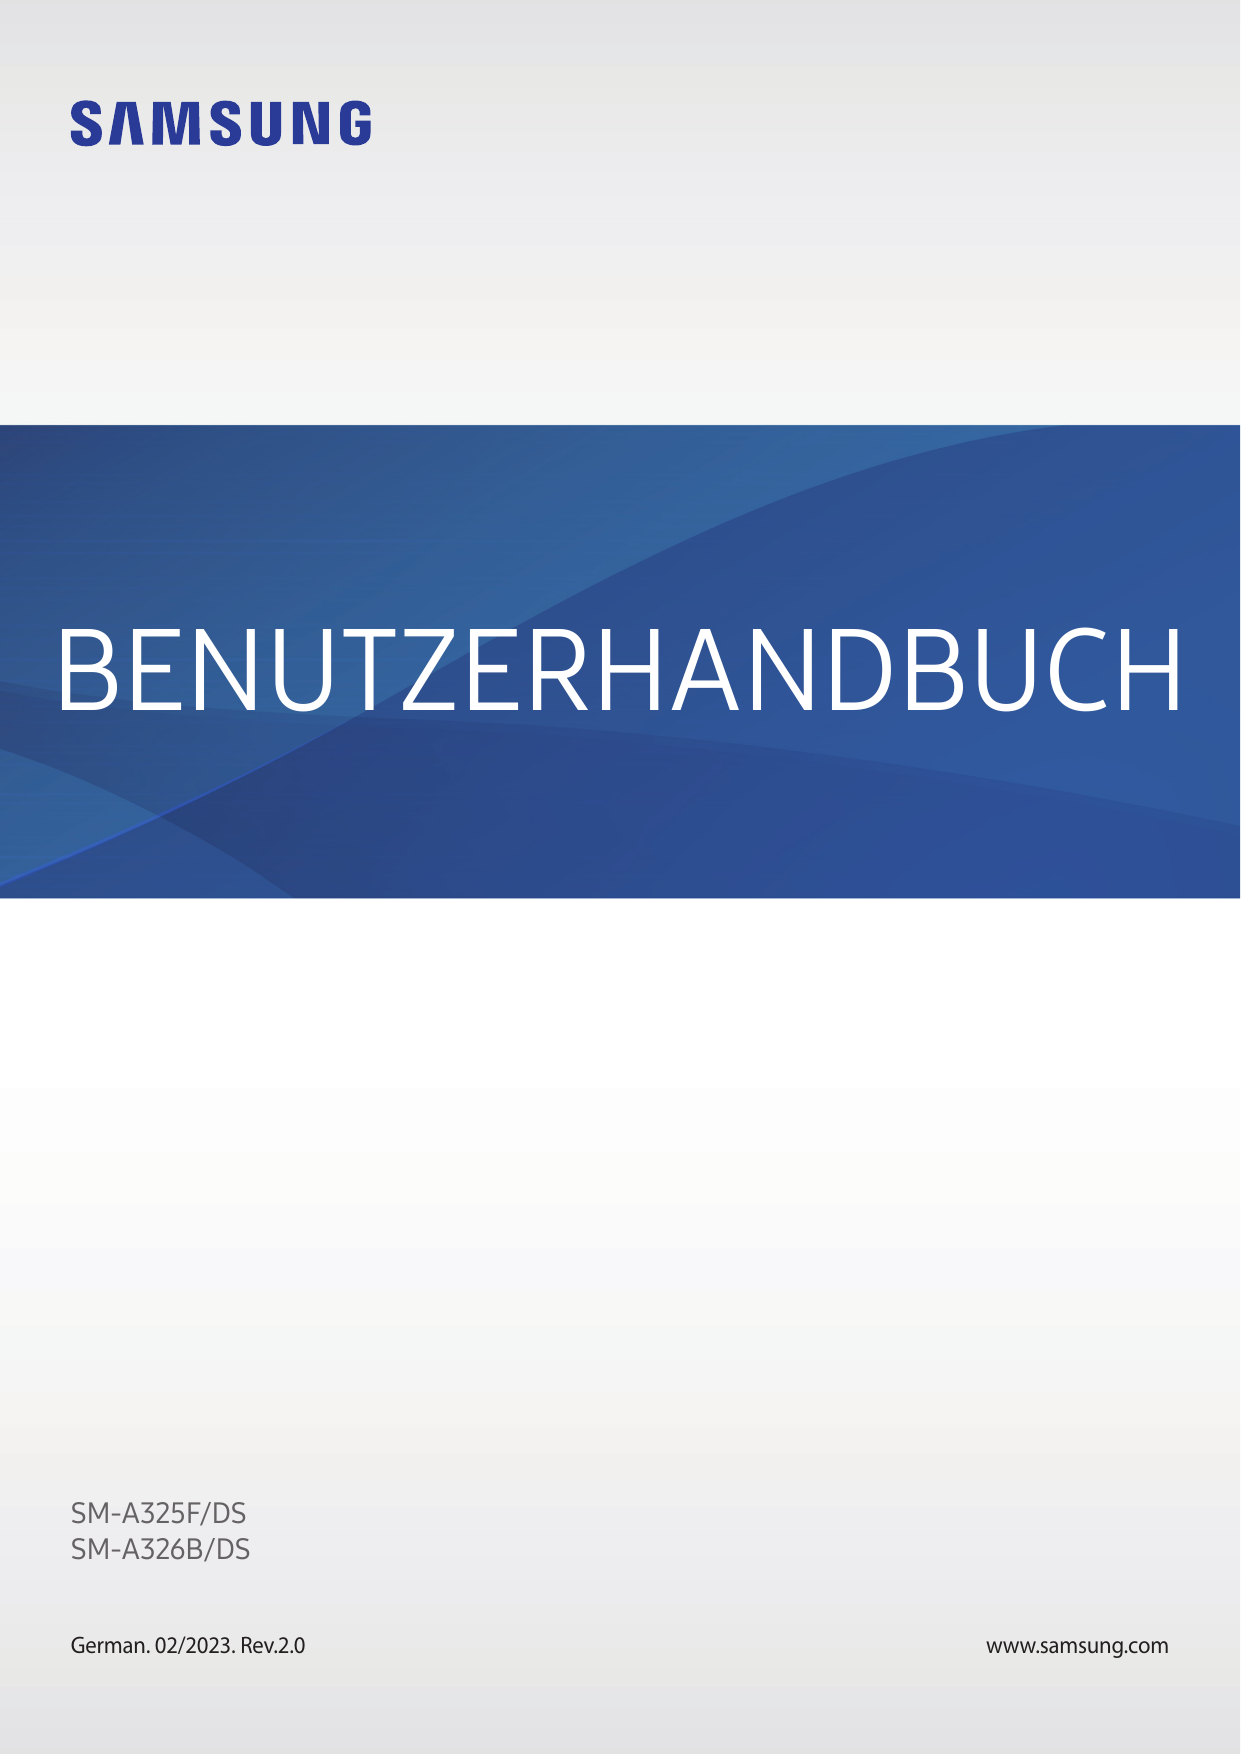 BENUTZERHANDBUCHSM-A325F/DSSM-A326B/DSGerman. 02/2023. Rev.2.0www.samsung.com